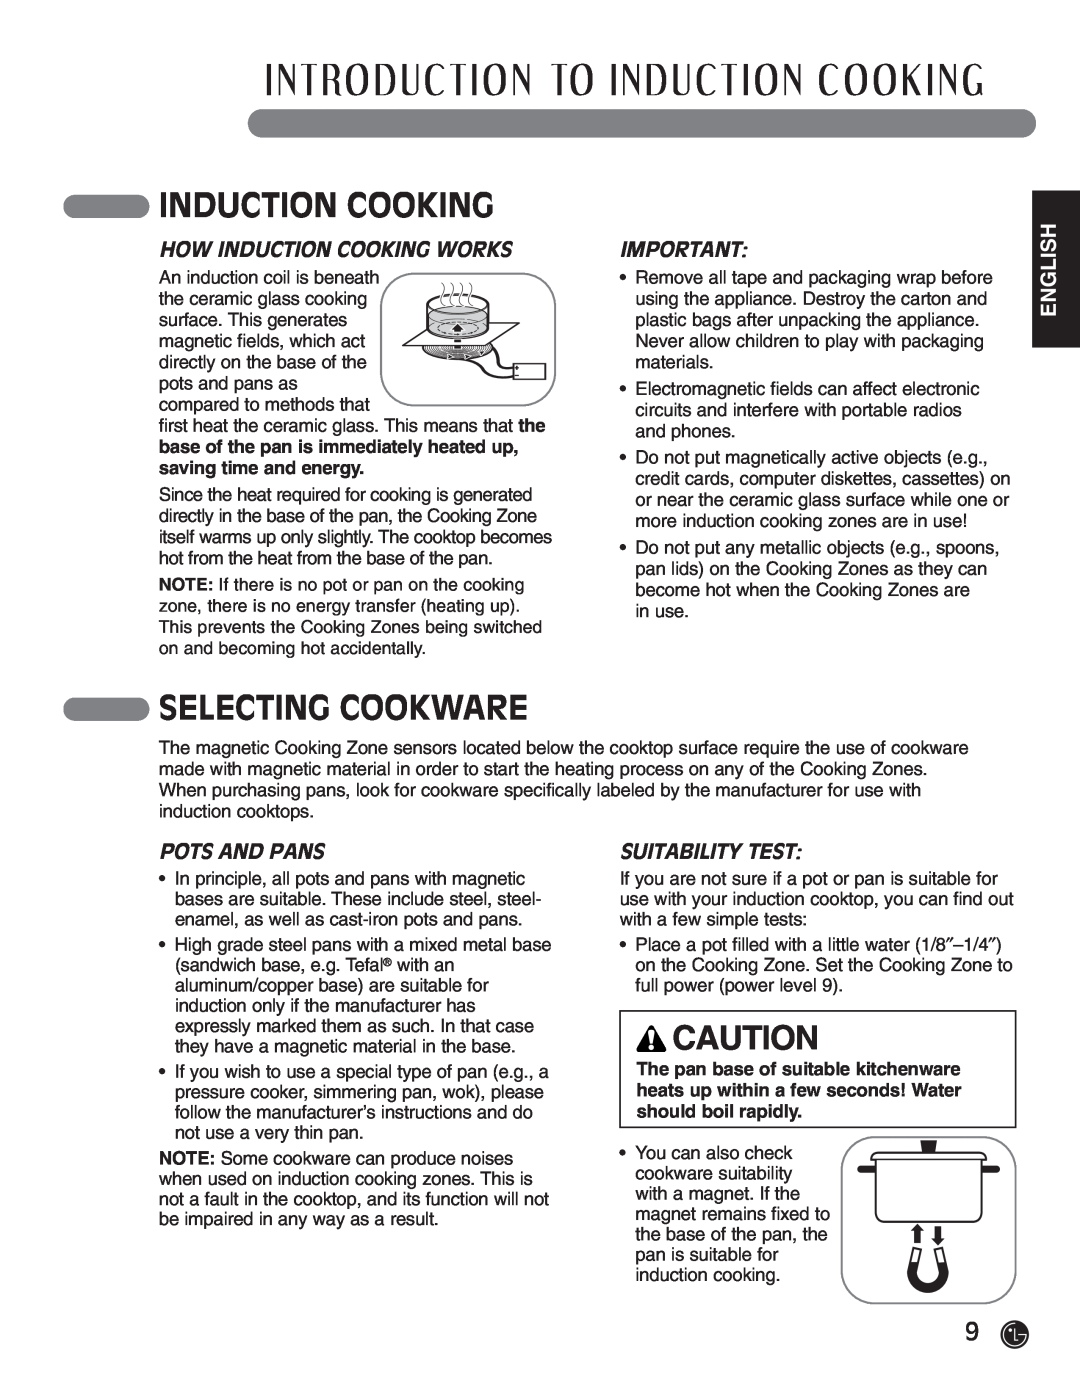 LG Electronics HN7413AG Induction Cooking, Selecting Cookware, I N T Ro D U C T I O N To I N D U C T I O N C O O K I N G 